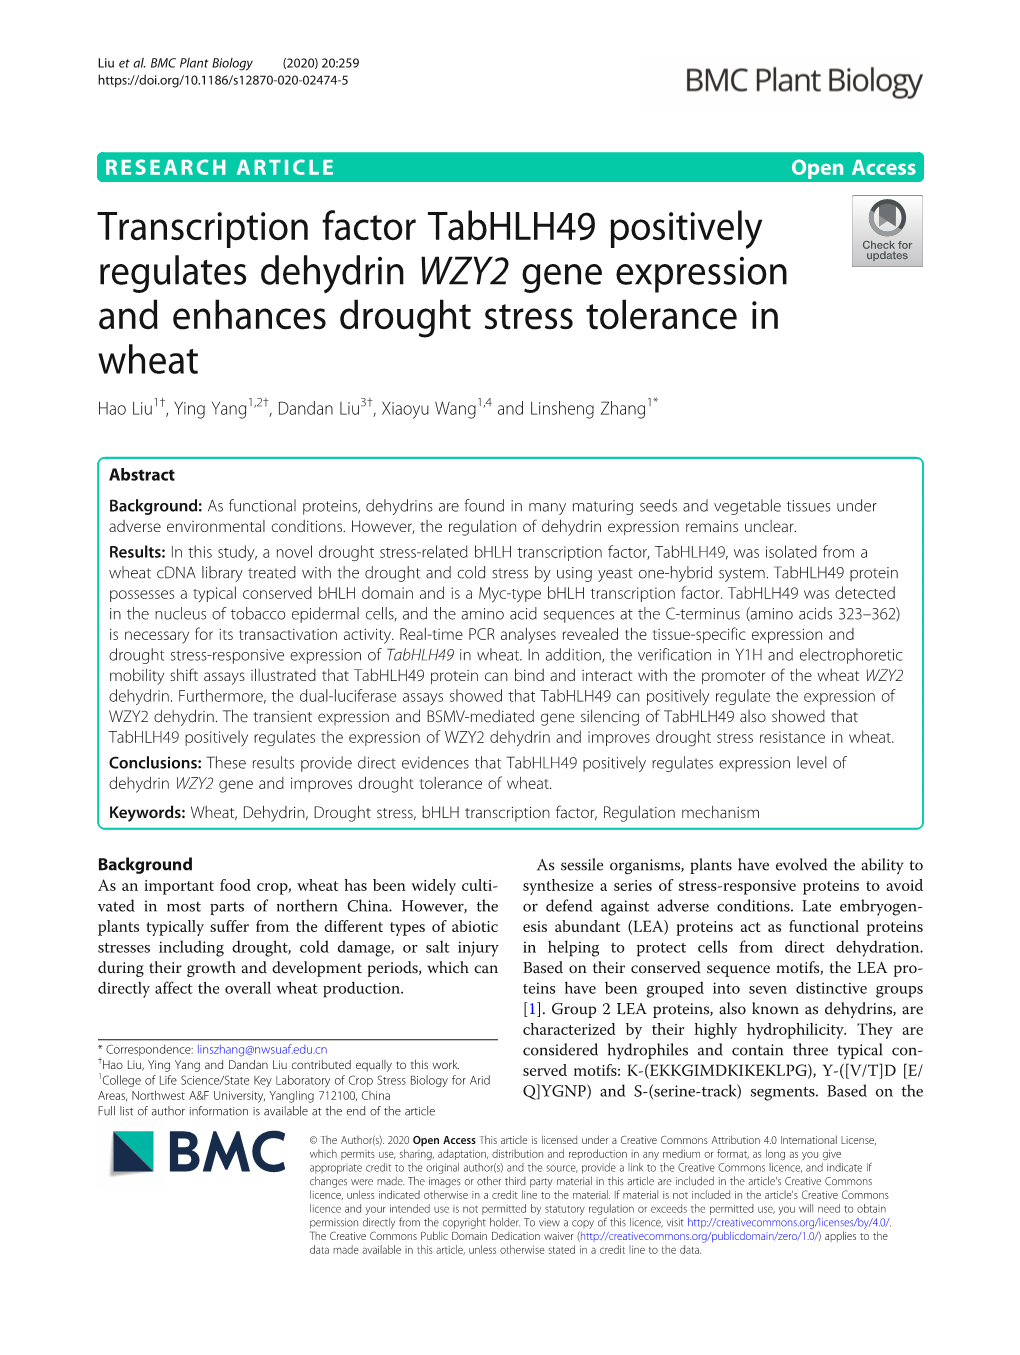 Transcription Factor Tabhlh49 Positively Regulates Dehydrin WZY2